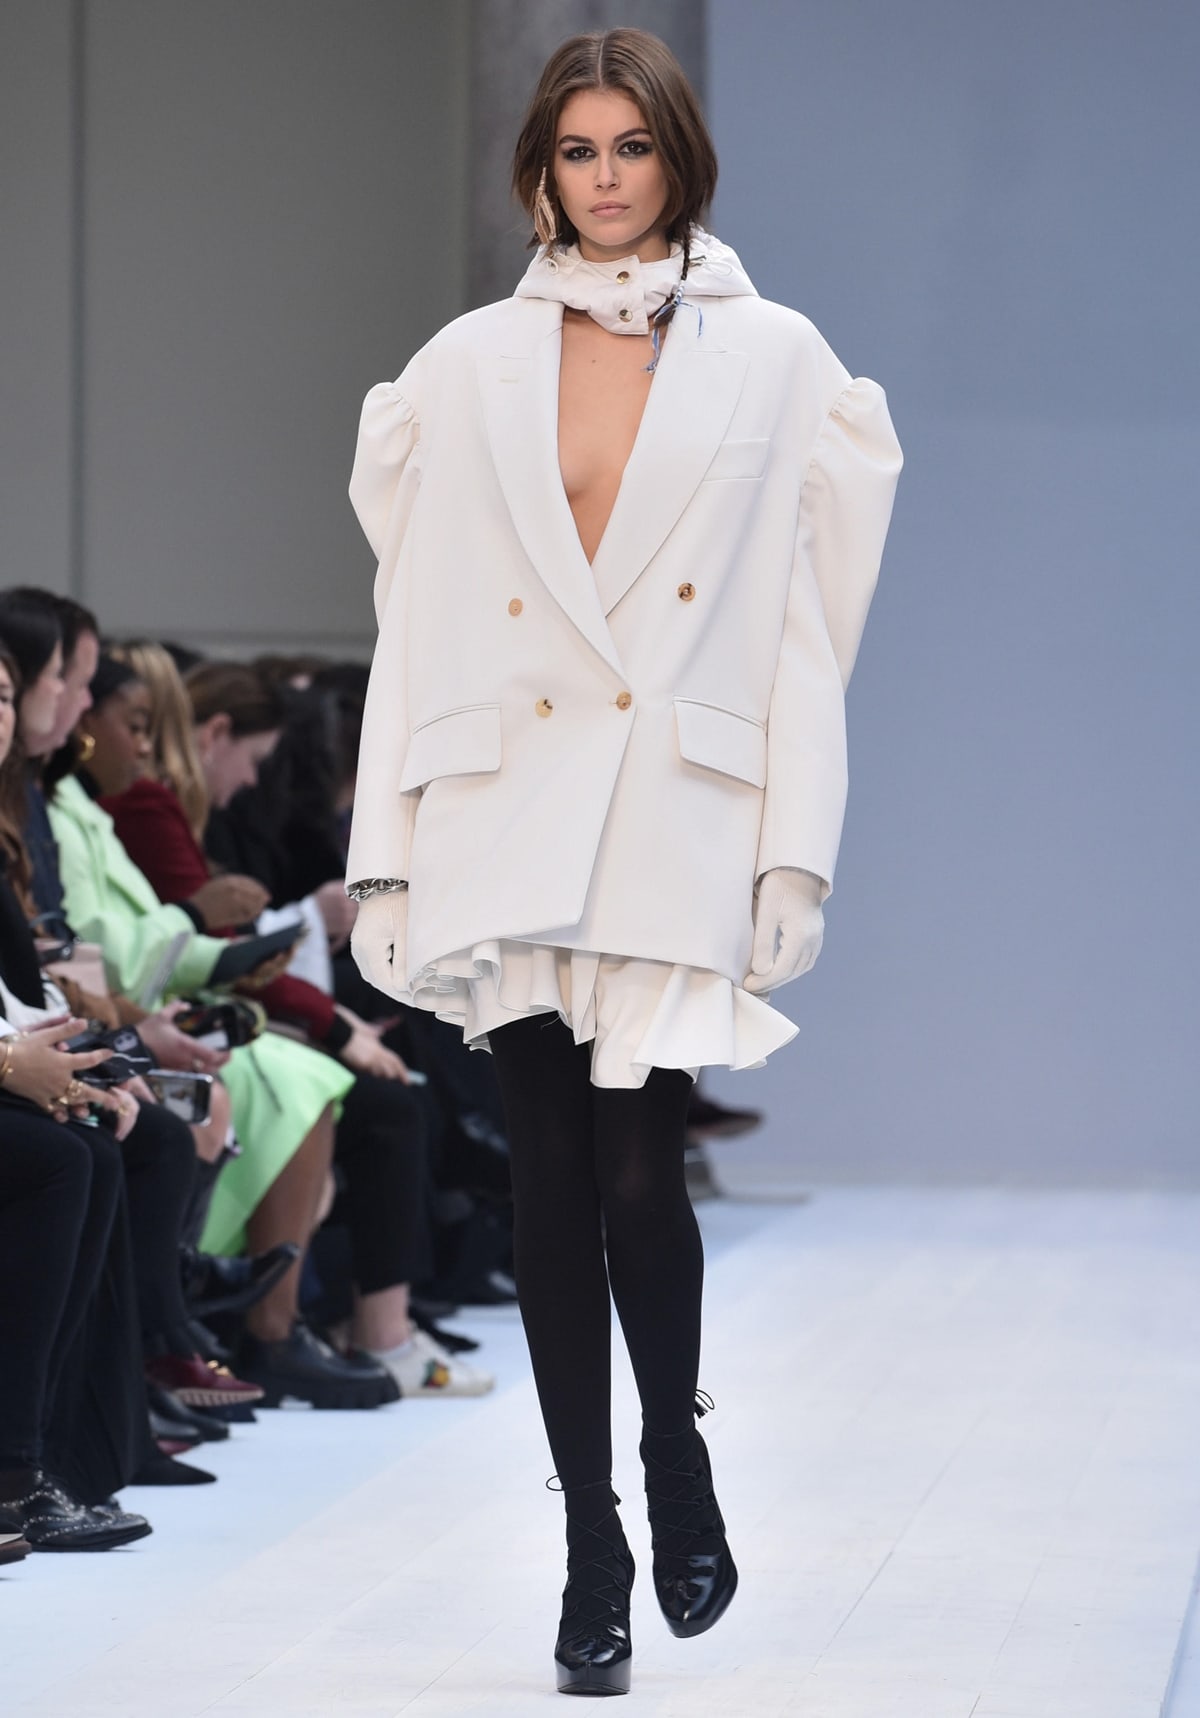 Kaia Gerber walks the runway during the Max Mara fashion show